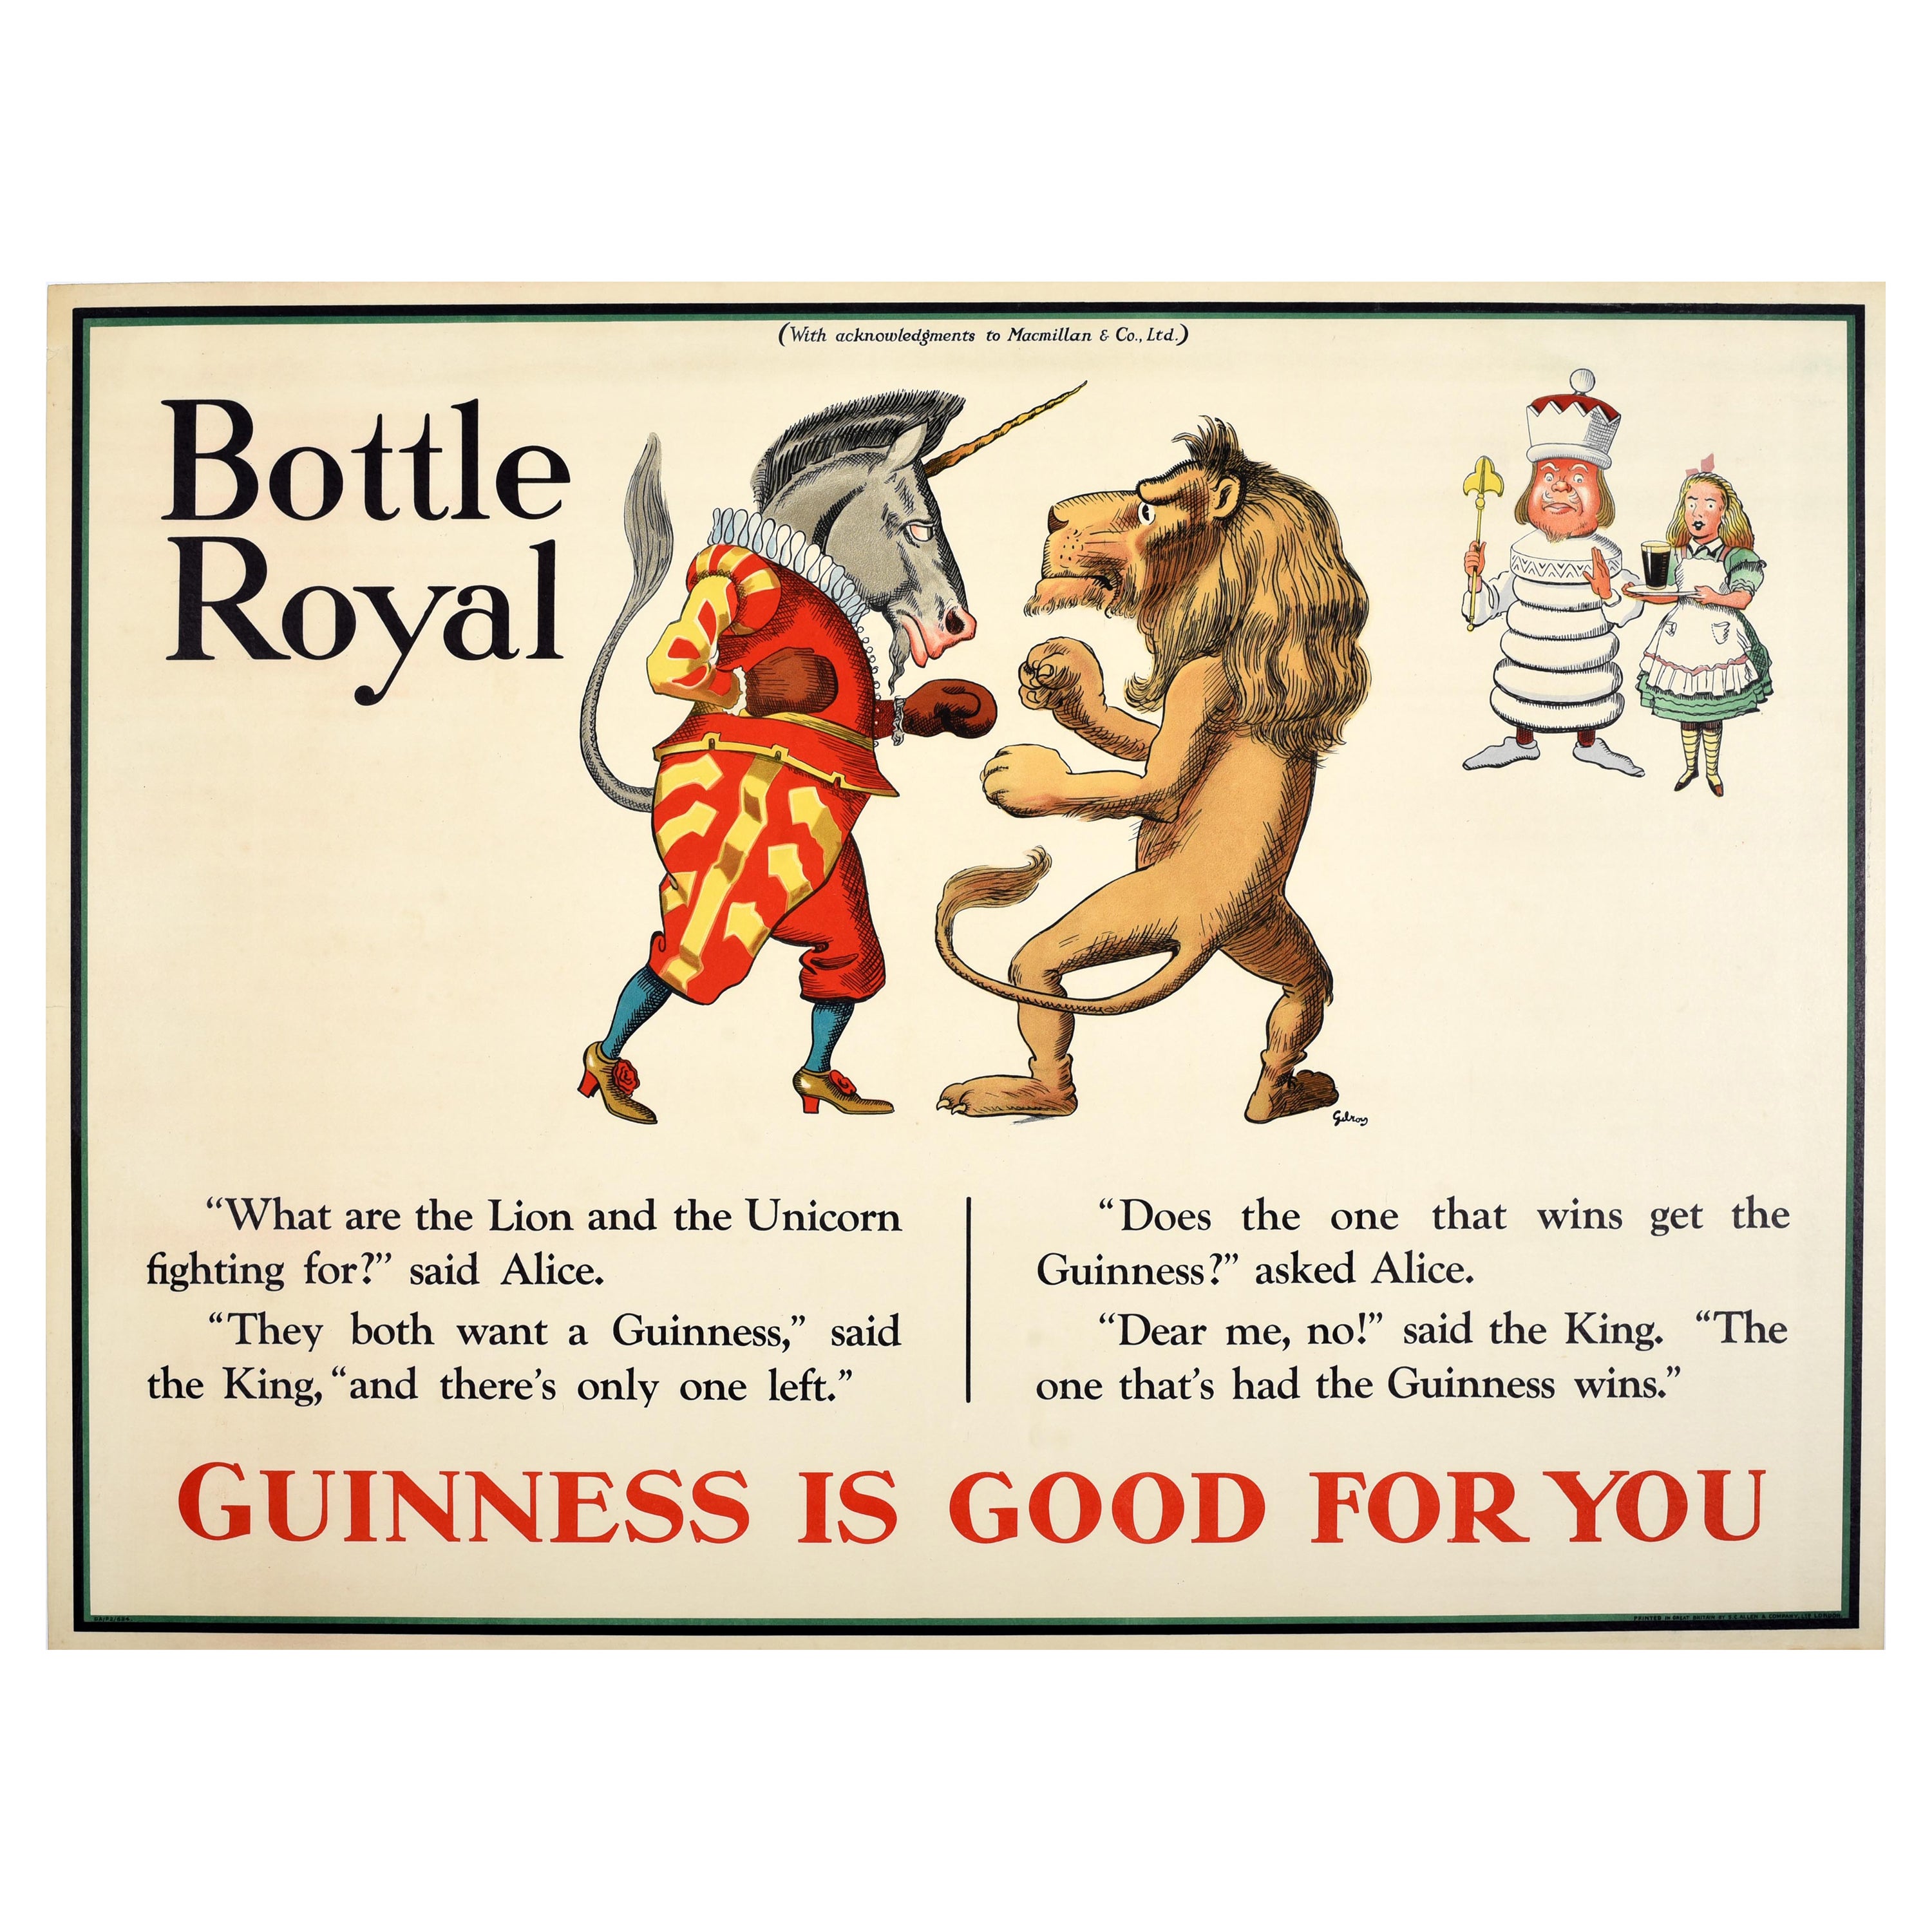 Rare Original Vintage Advertising Poster Guinness Bottle Royal John Gilroy For Sale